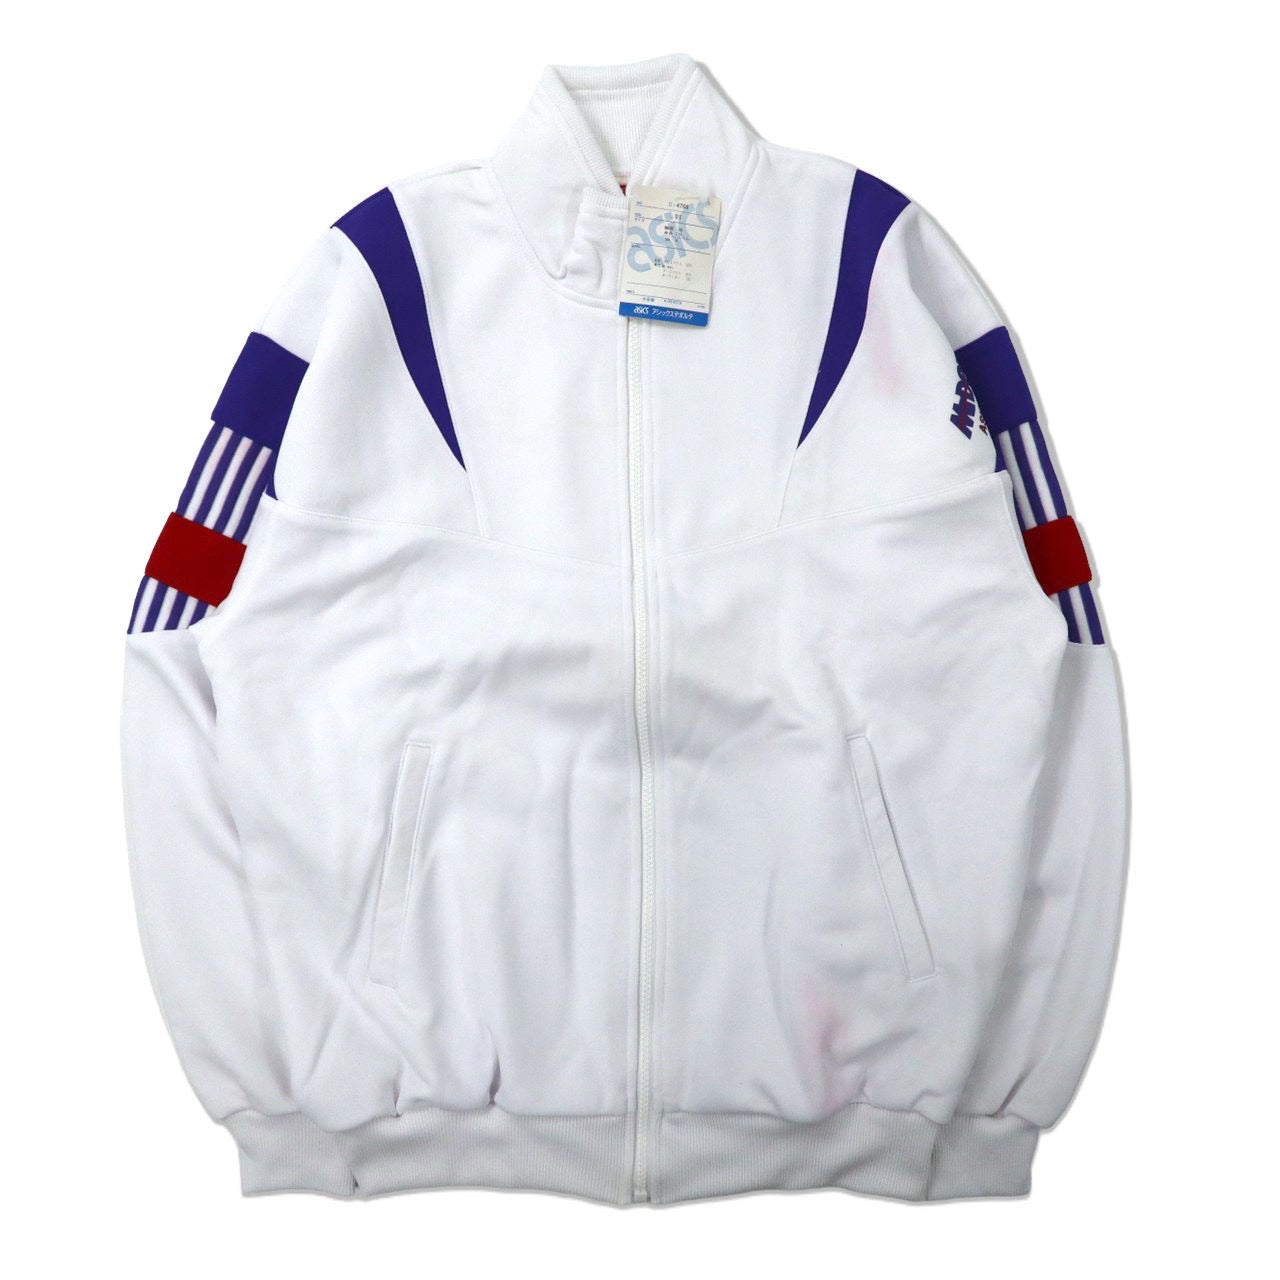 MR DEPORTE (ASICS) Track Jacket LL White polyester 90s Unused